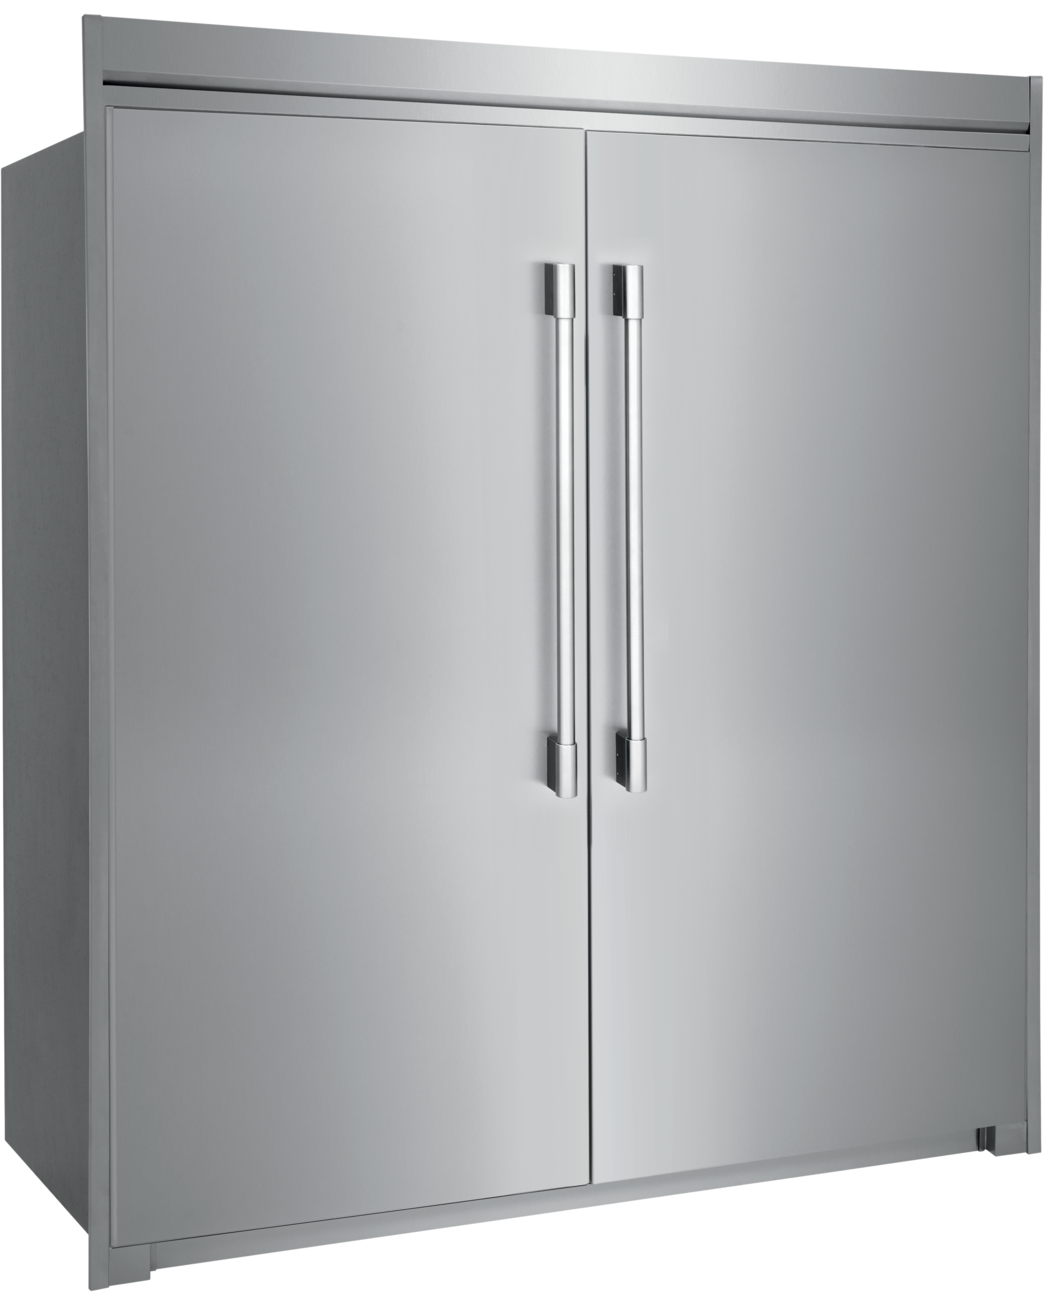 FRIGIDAIRE Professional Twins Freezer/Refrigerator Unit